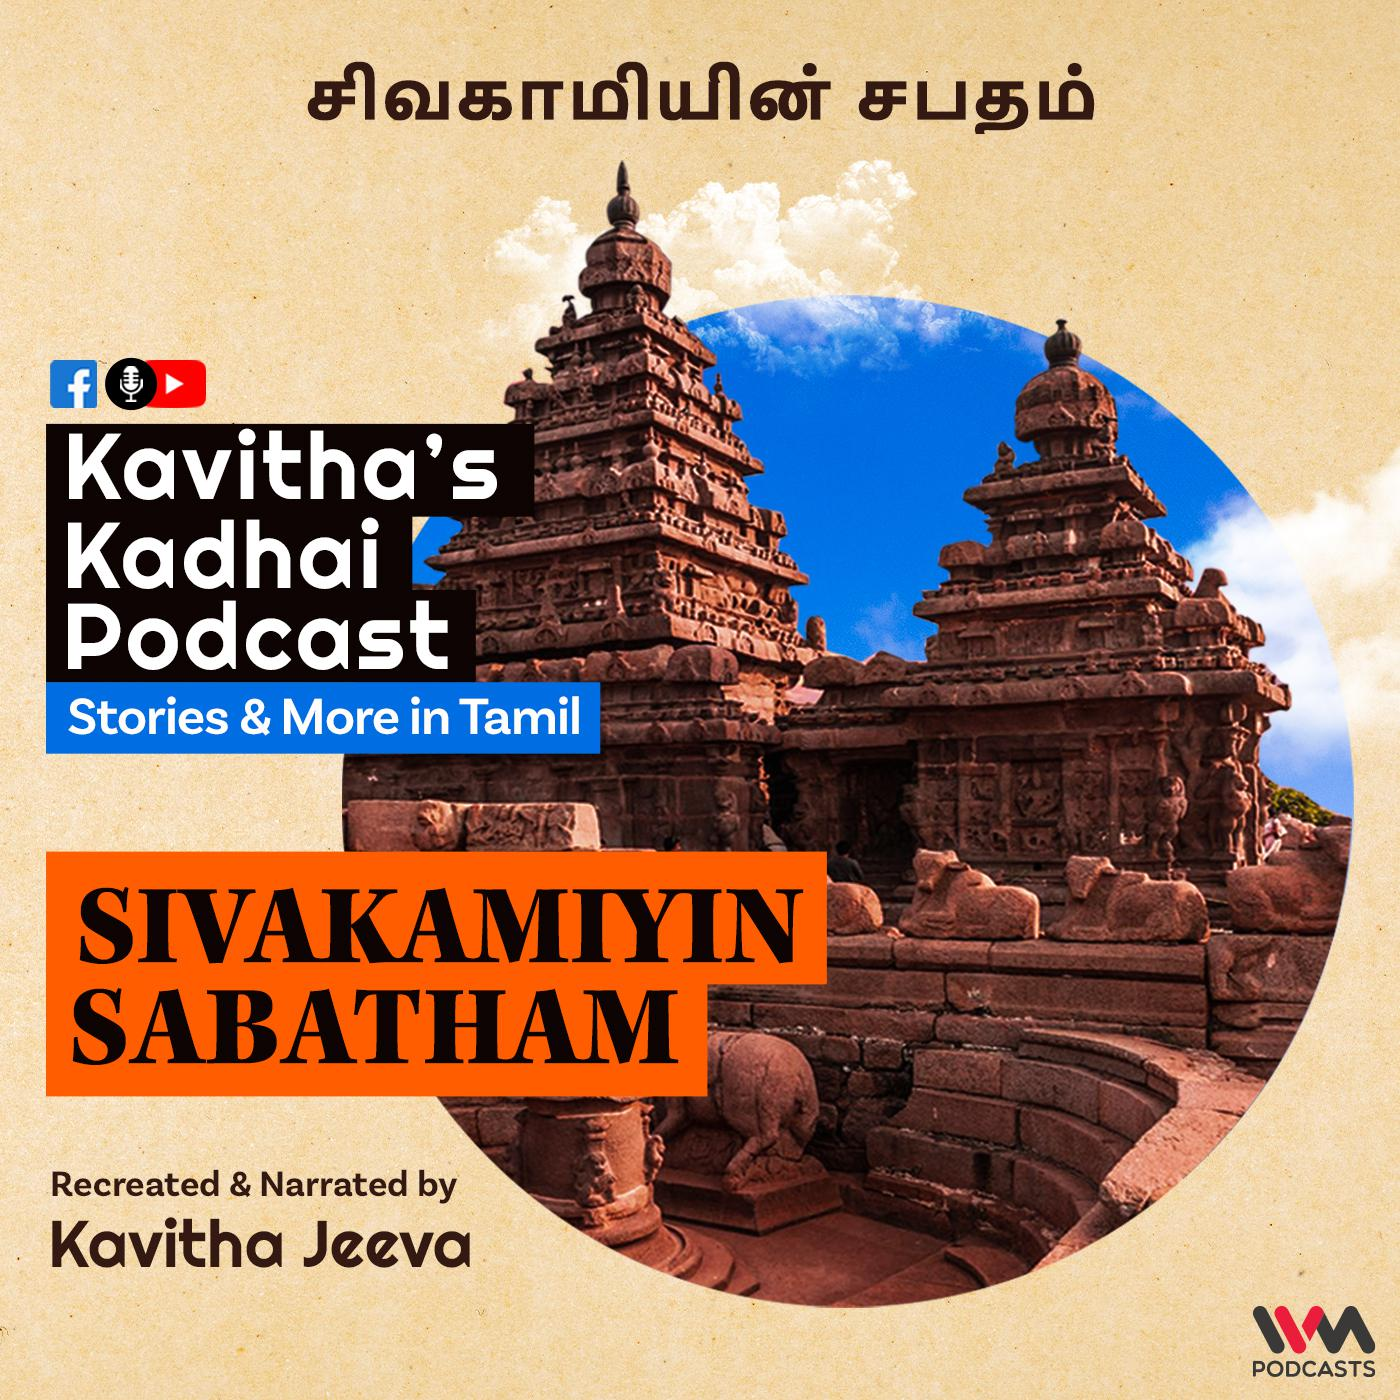 KadhaiPodcast's Sivakamiyin Sabatham with Kavitha Jeeva - Episode #130